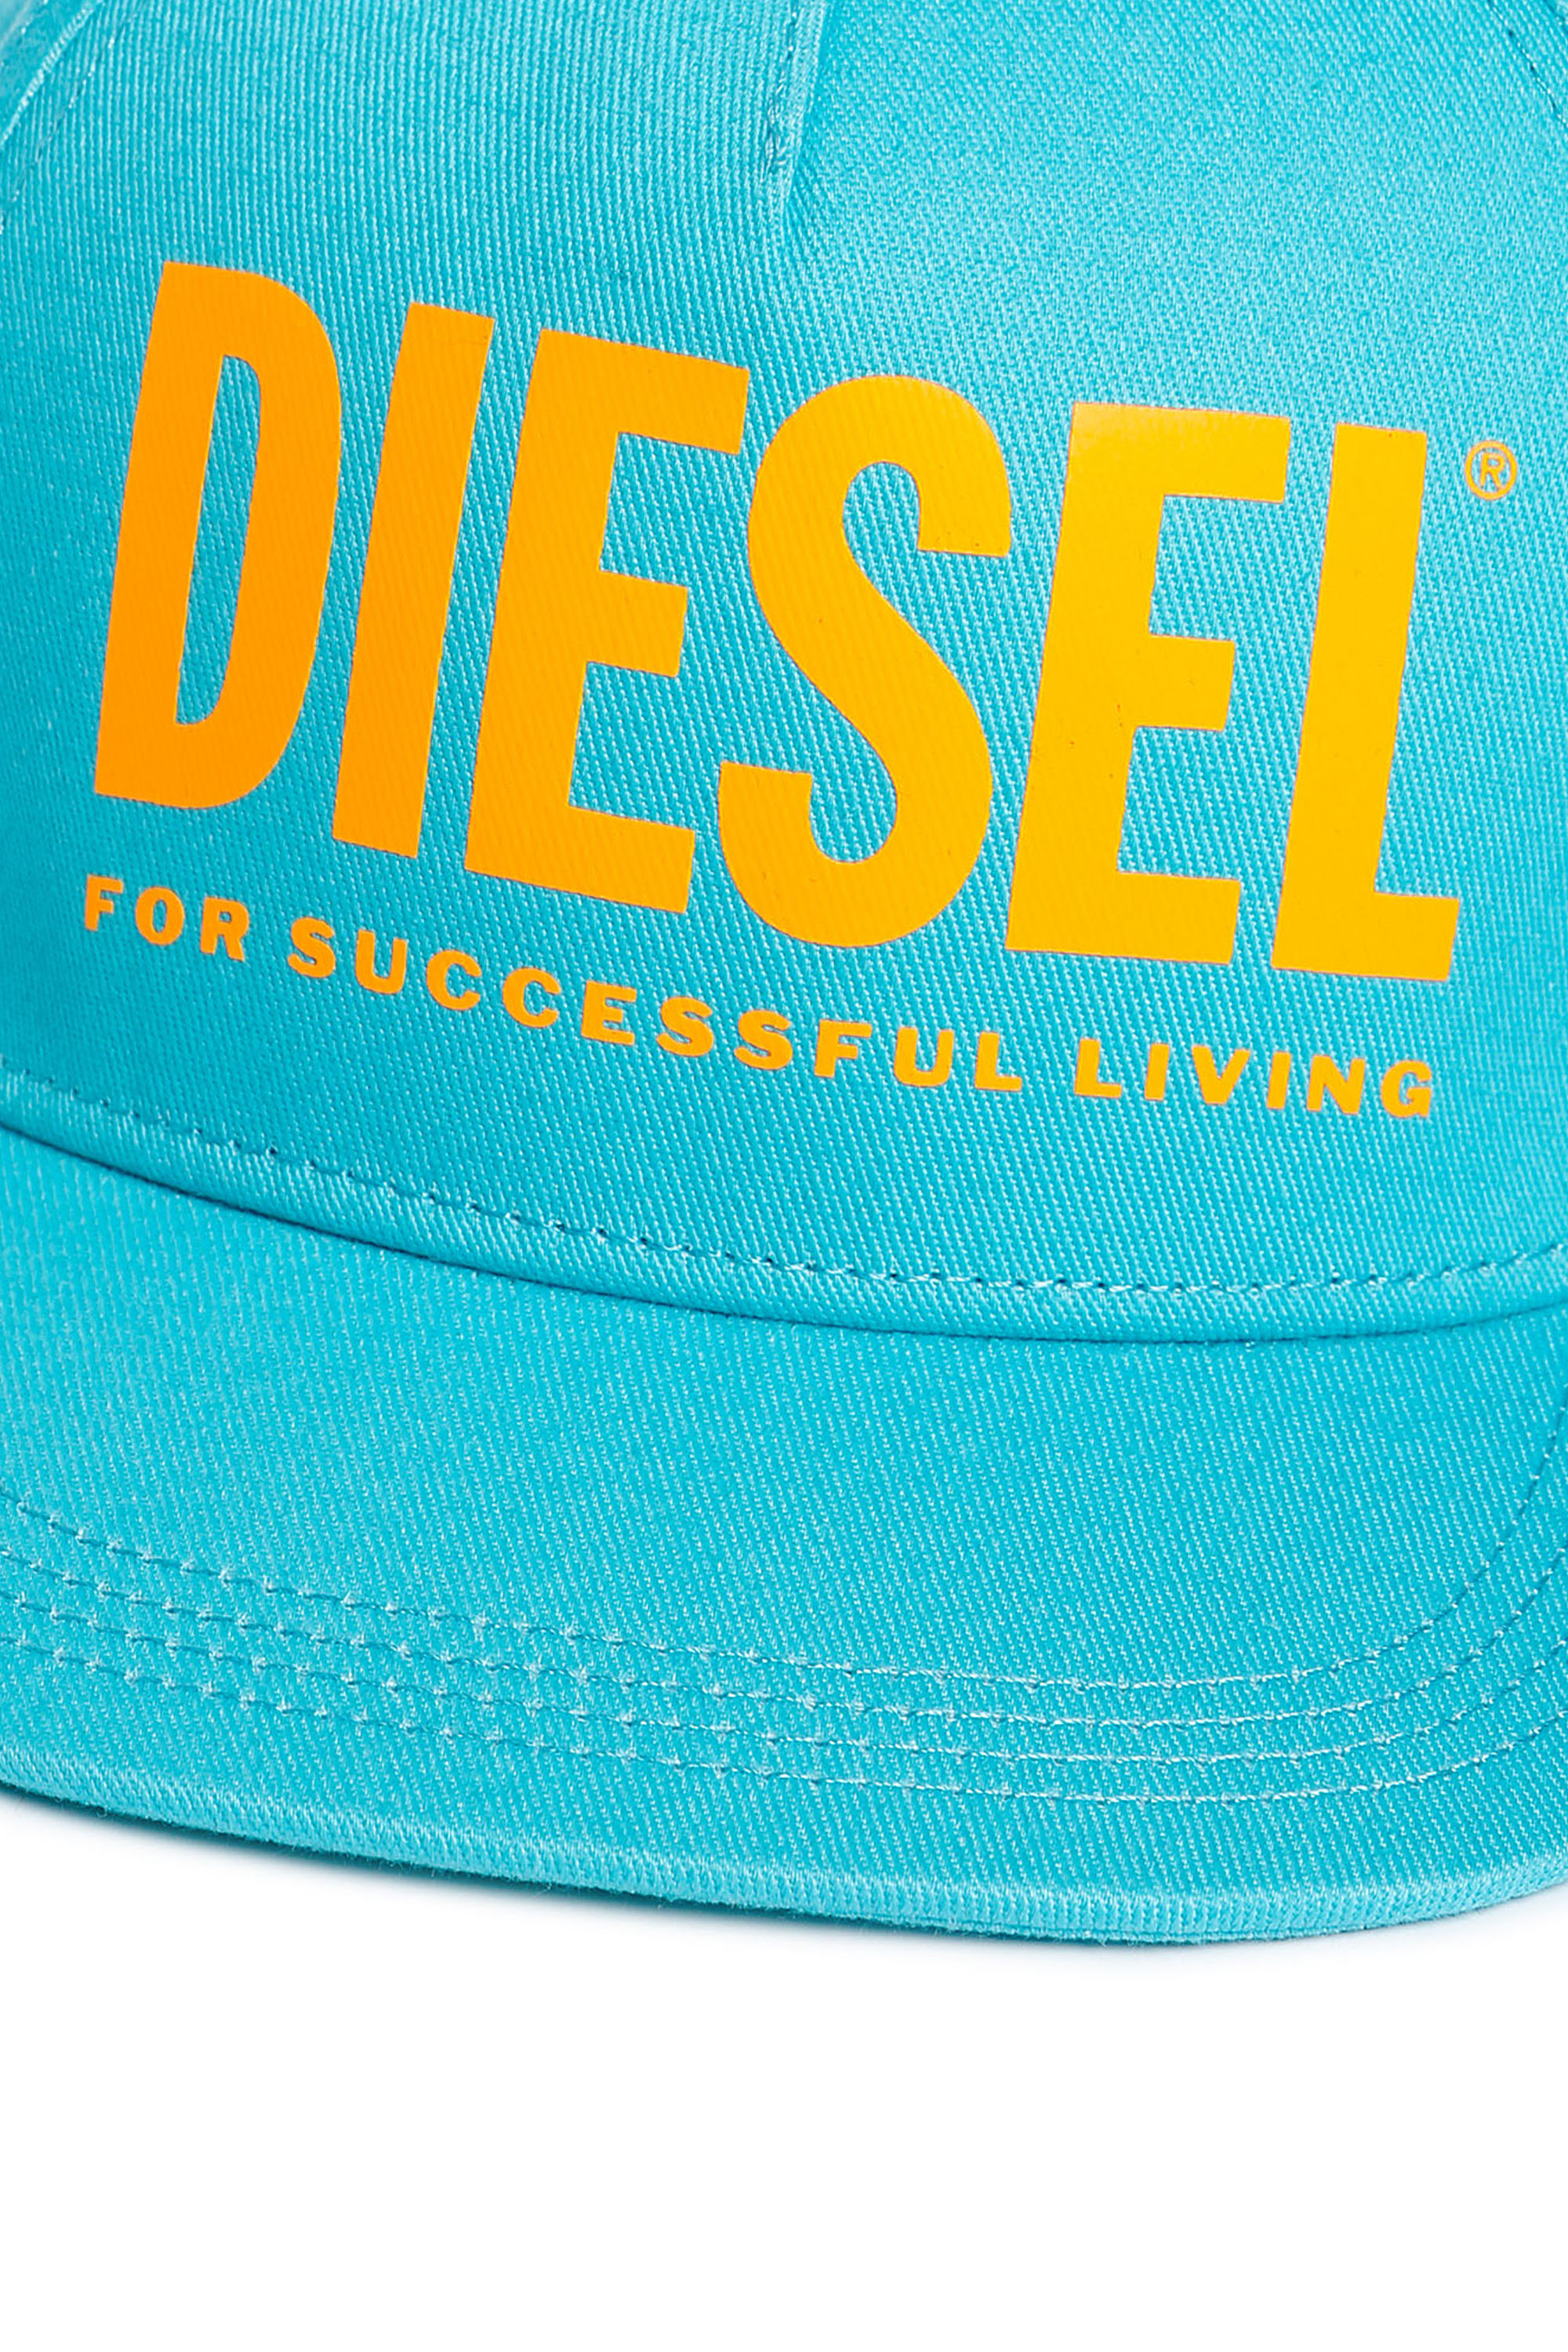 Diesel - FOLLY, Vert d'Eau - Image 3